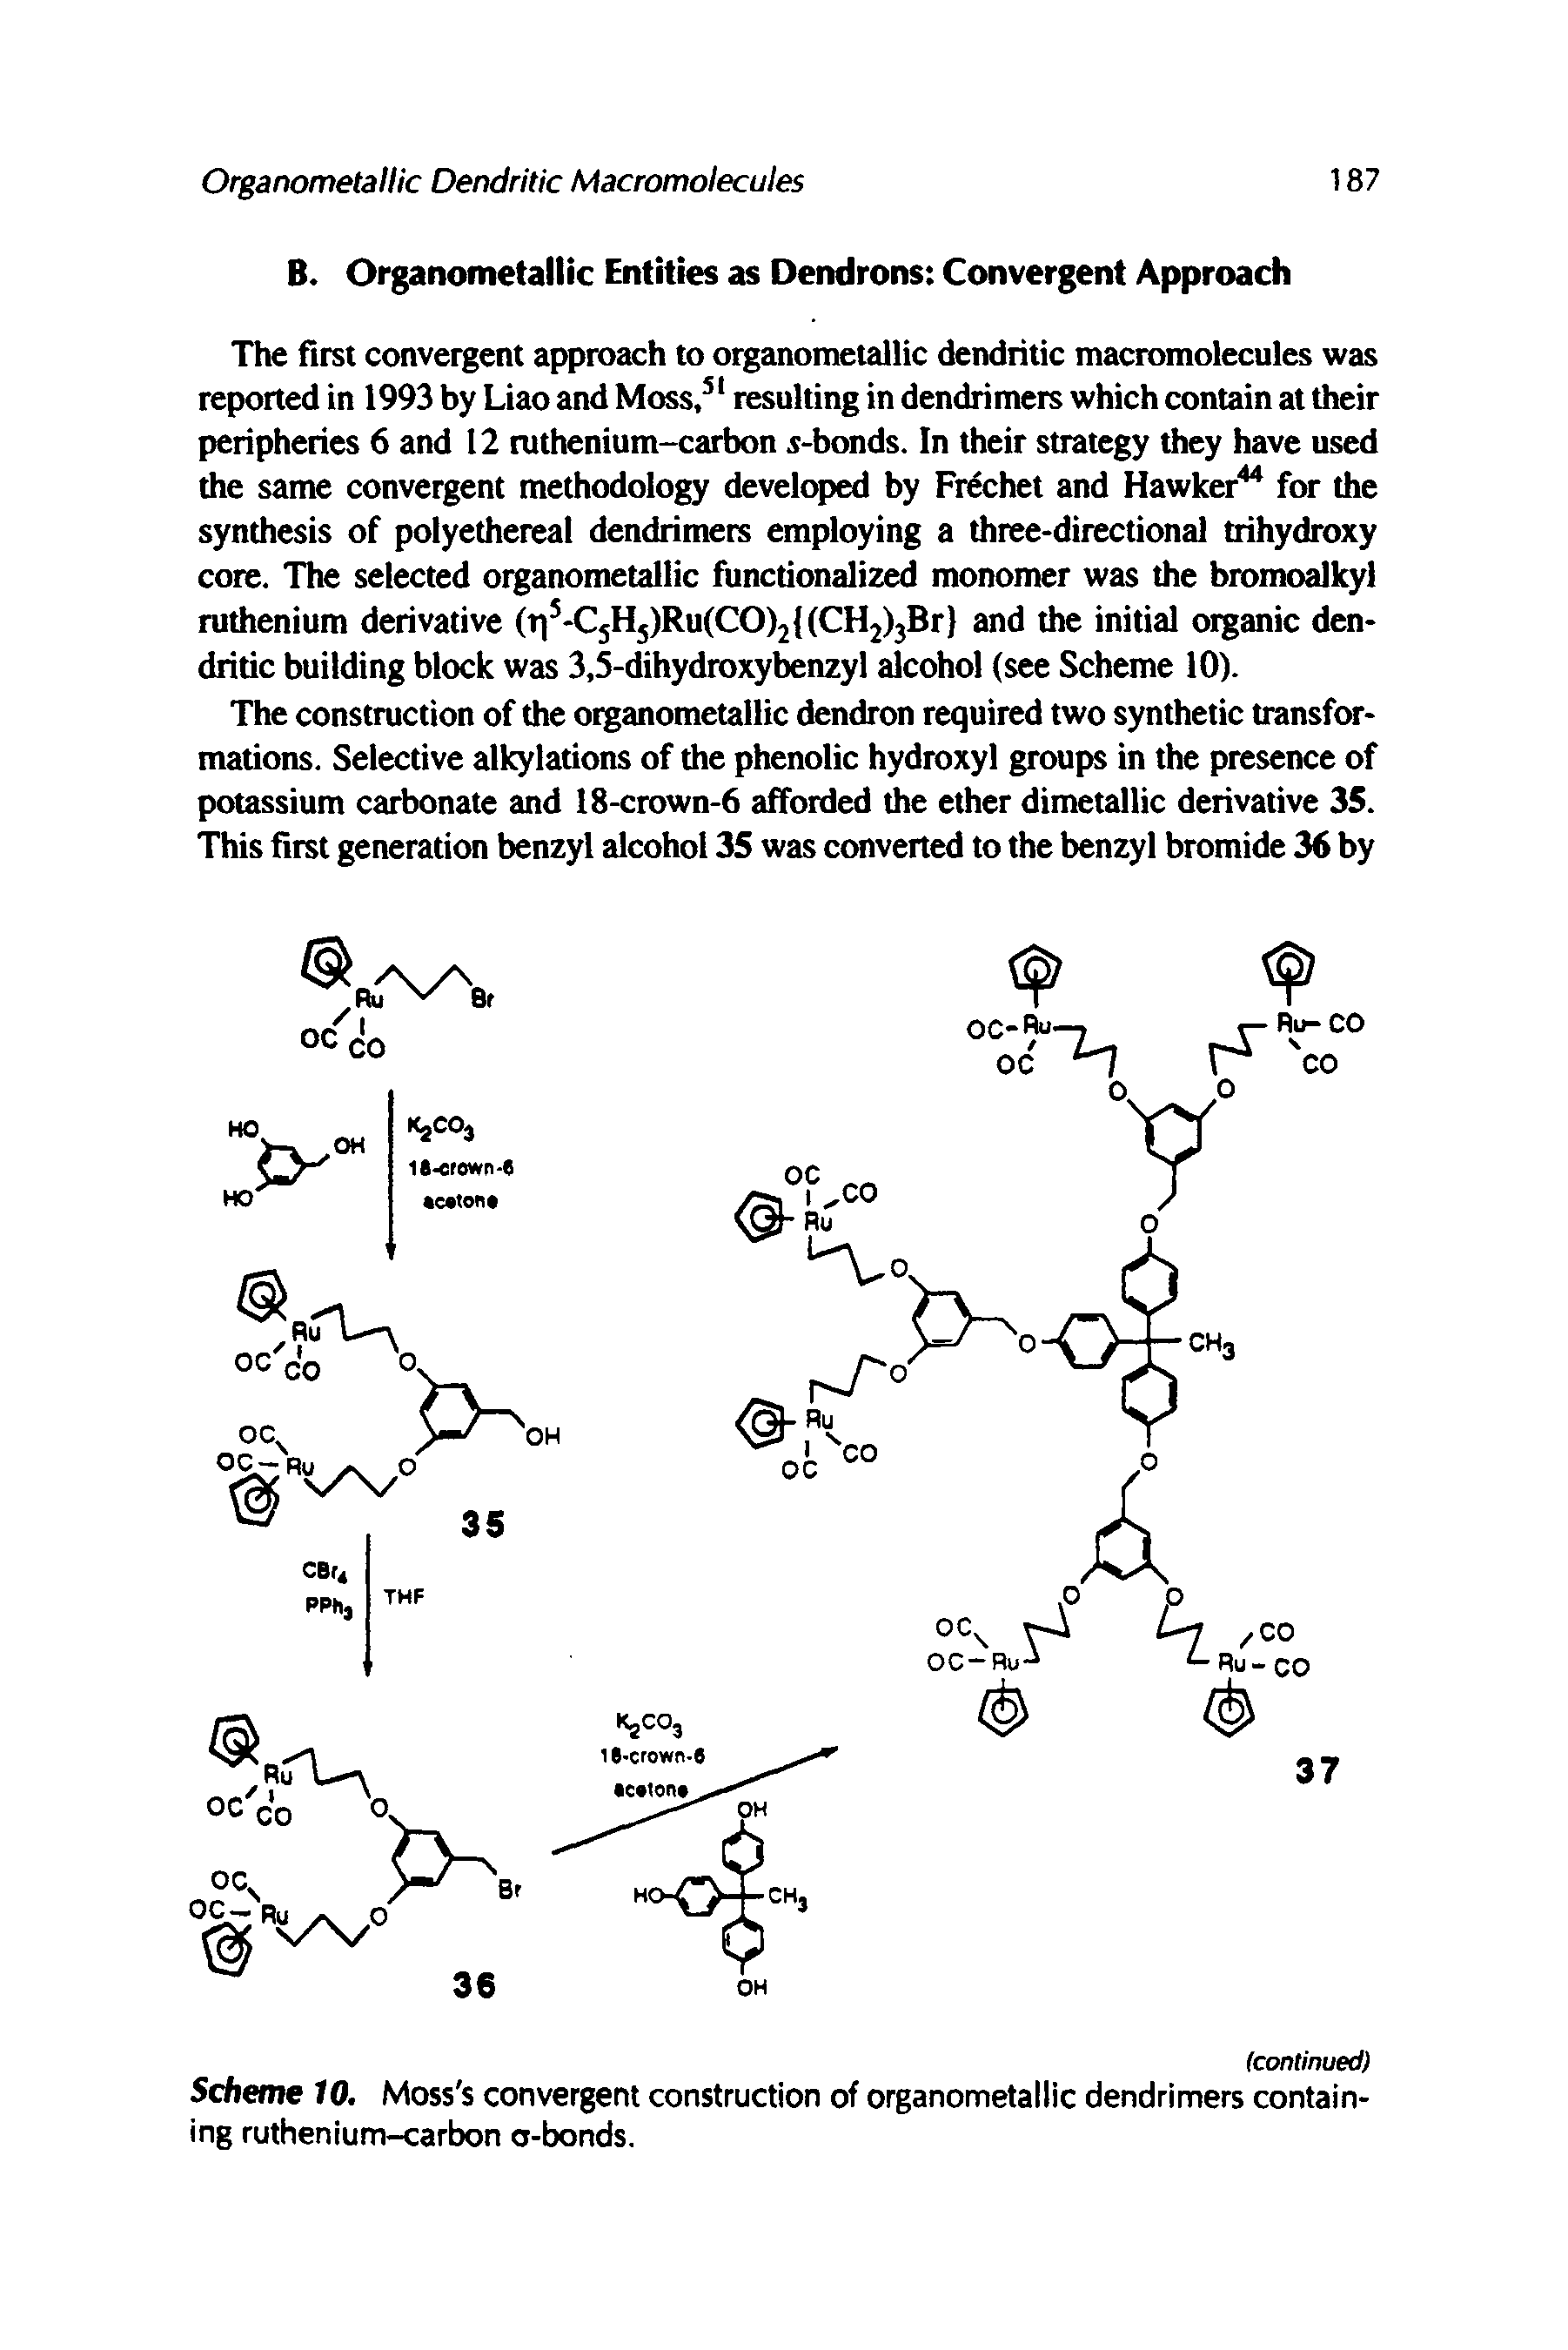 Scheme 10. Moss s convergent construction of organometallic dendrimers containing ruthenium-carbon o-bonds.